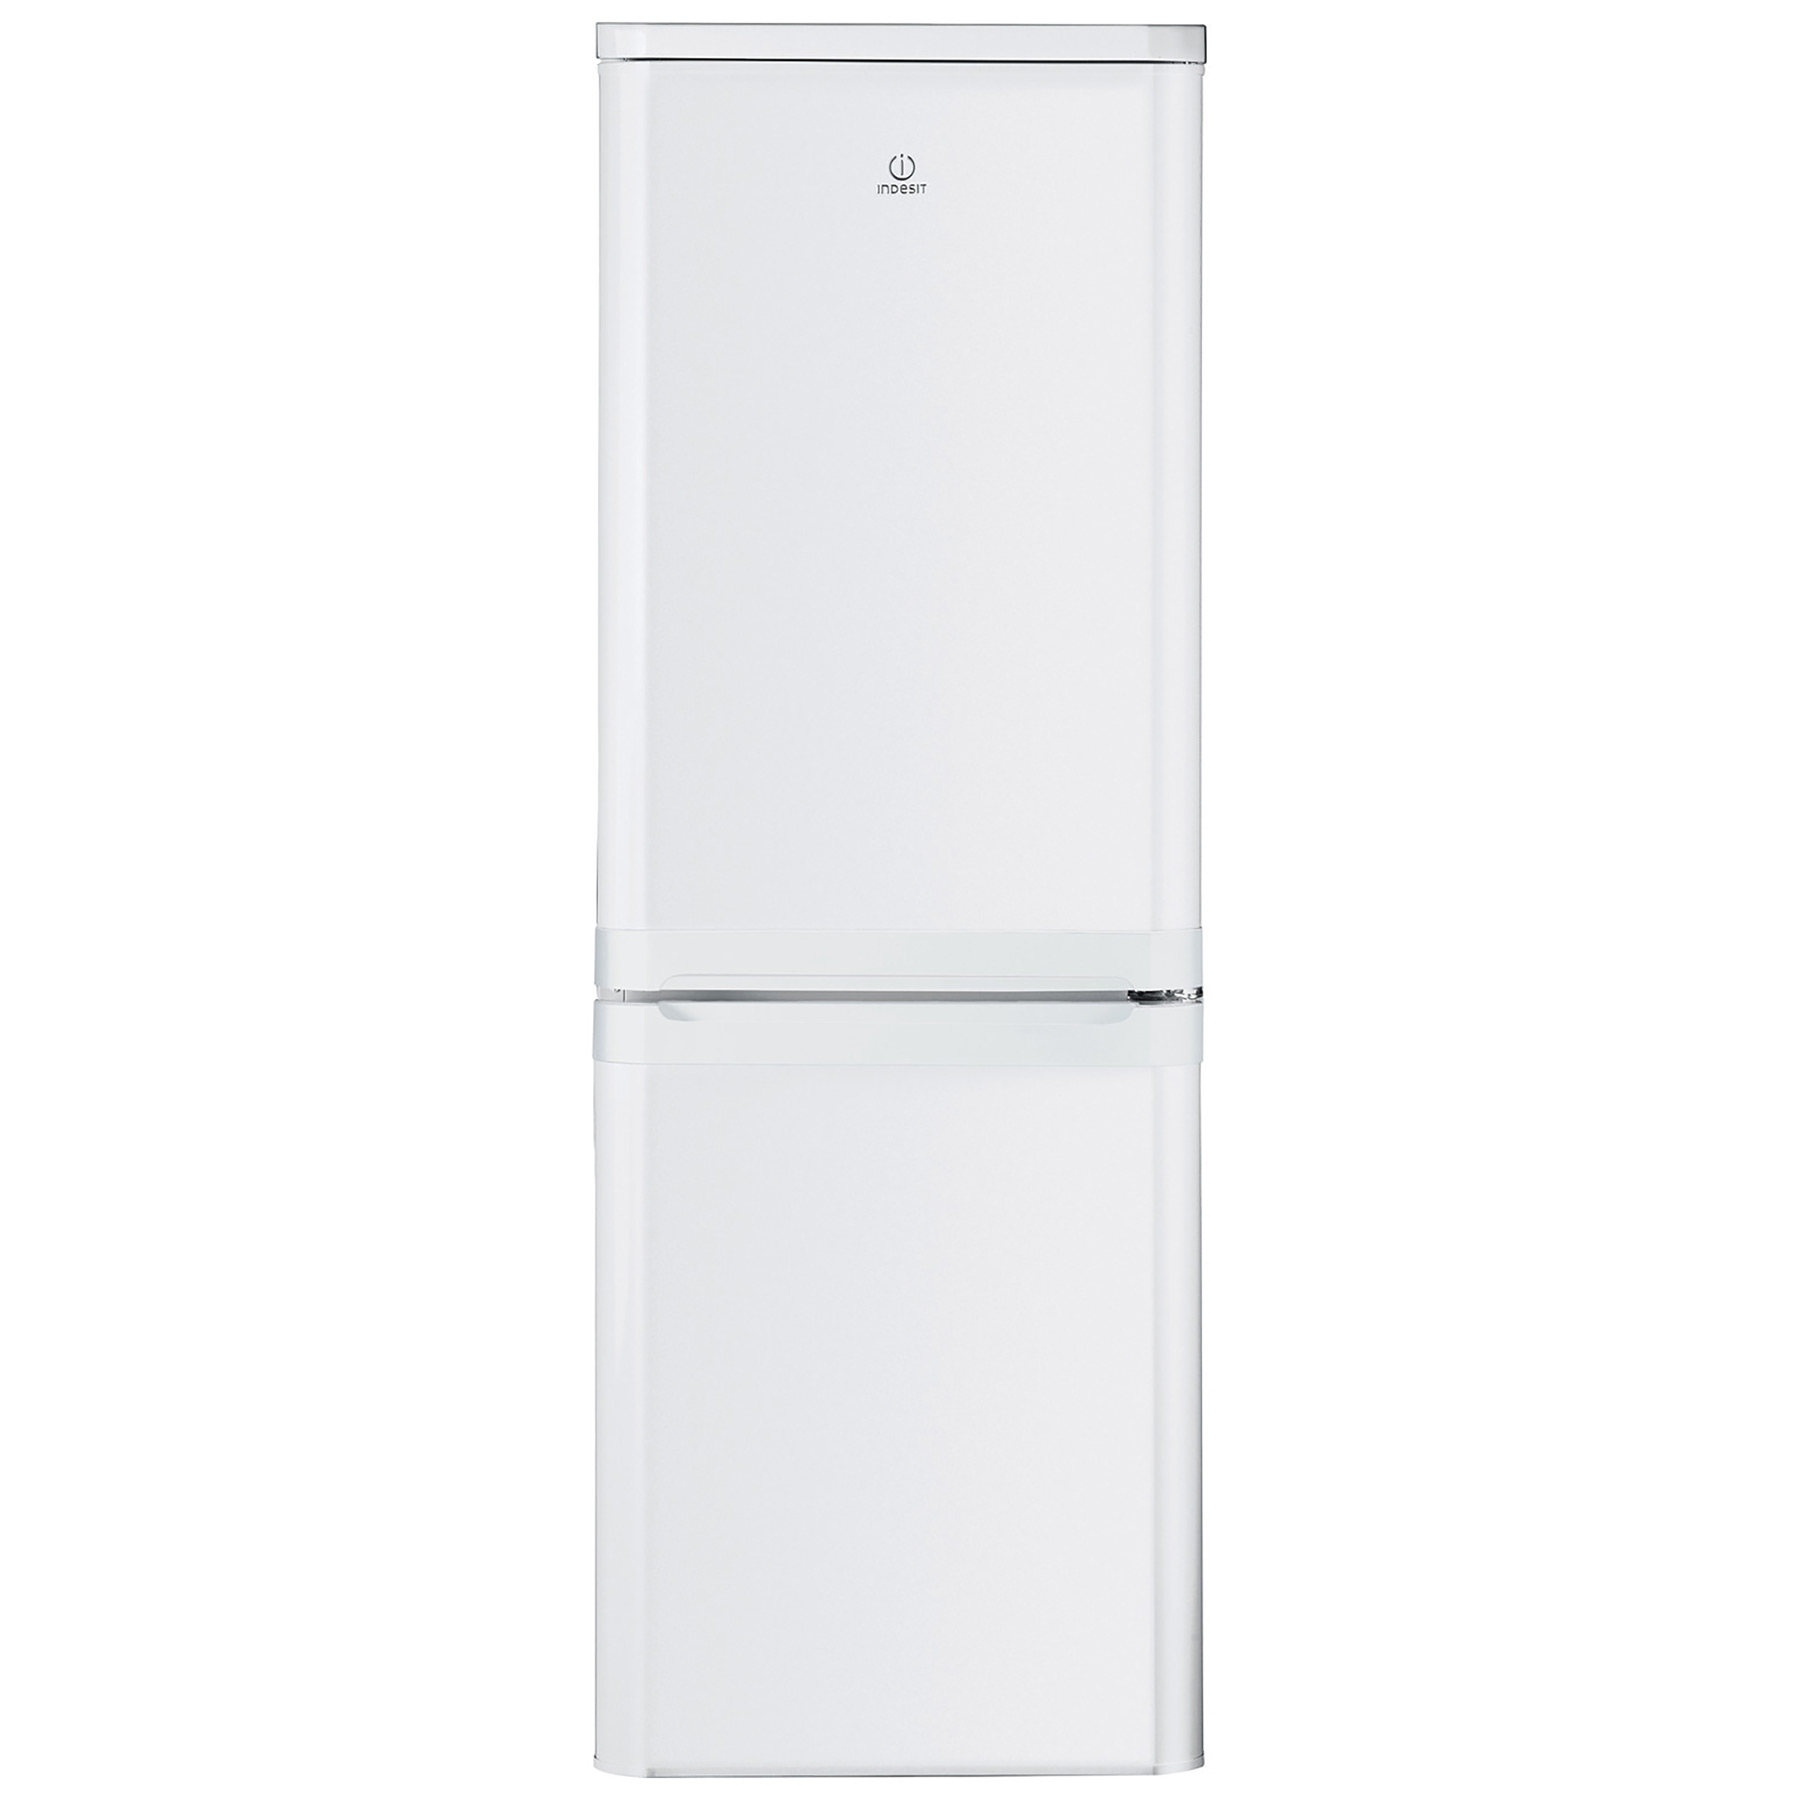 Indesit IBD5515W 55cm Fridge Freezer in White 1 57m F Rated 150 67L